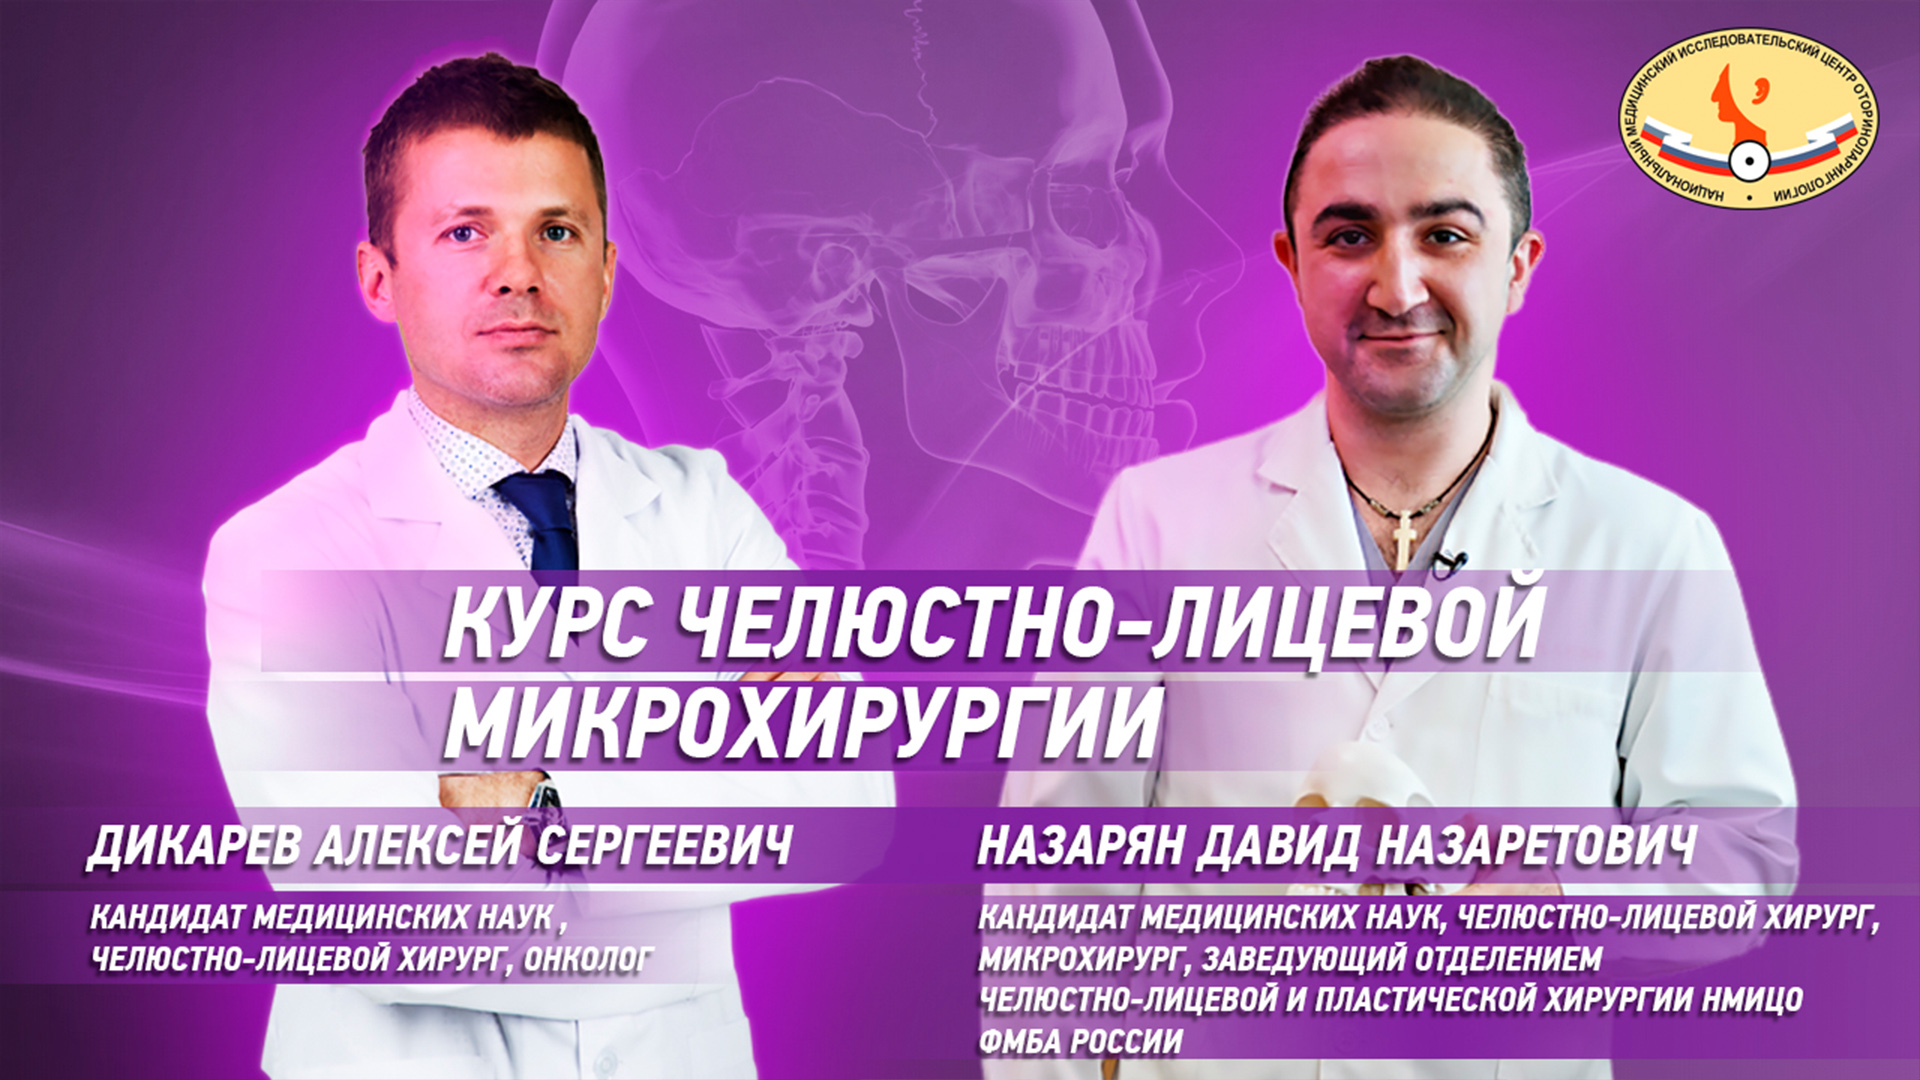 Курс челюстно-лицевой  микрохирургии  с Давидом Назаряном и Алексеем Дикаревым.